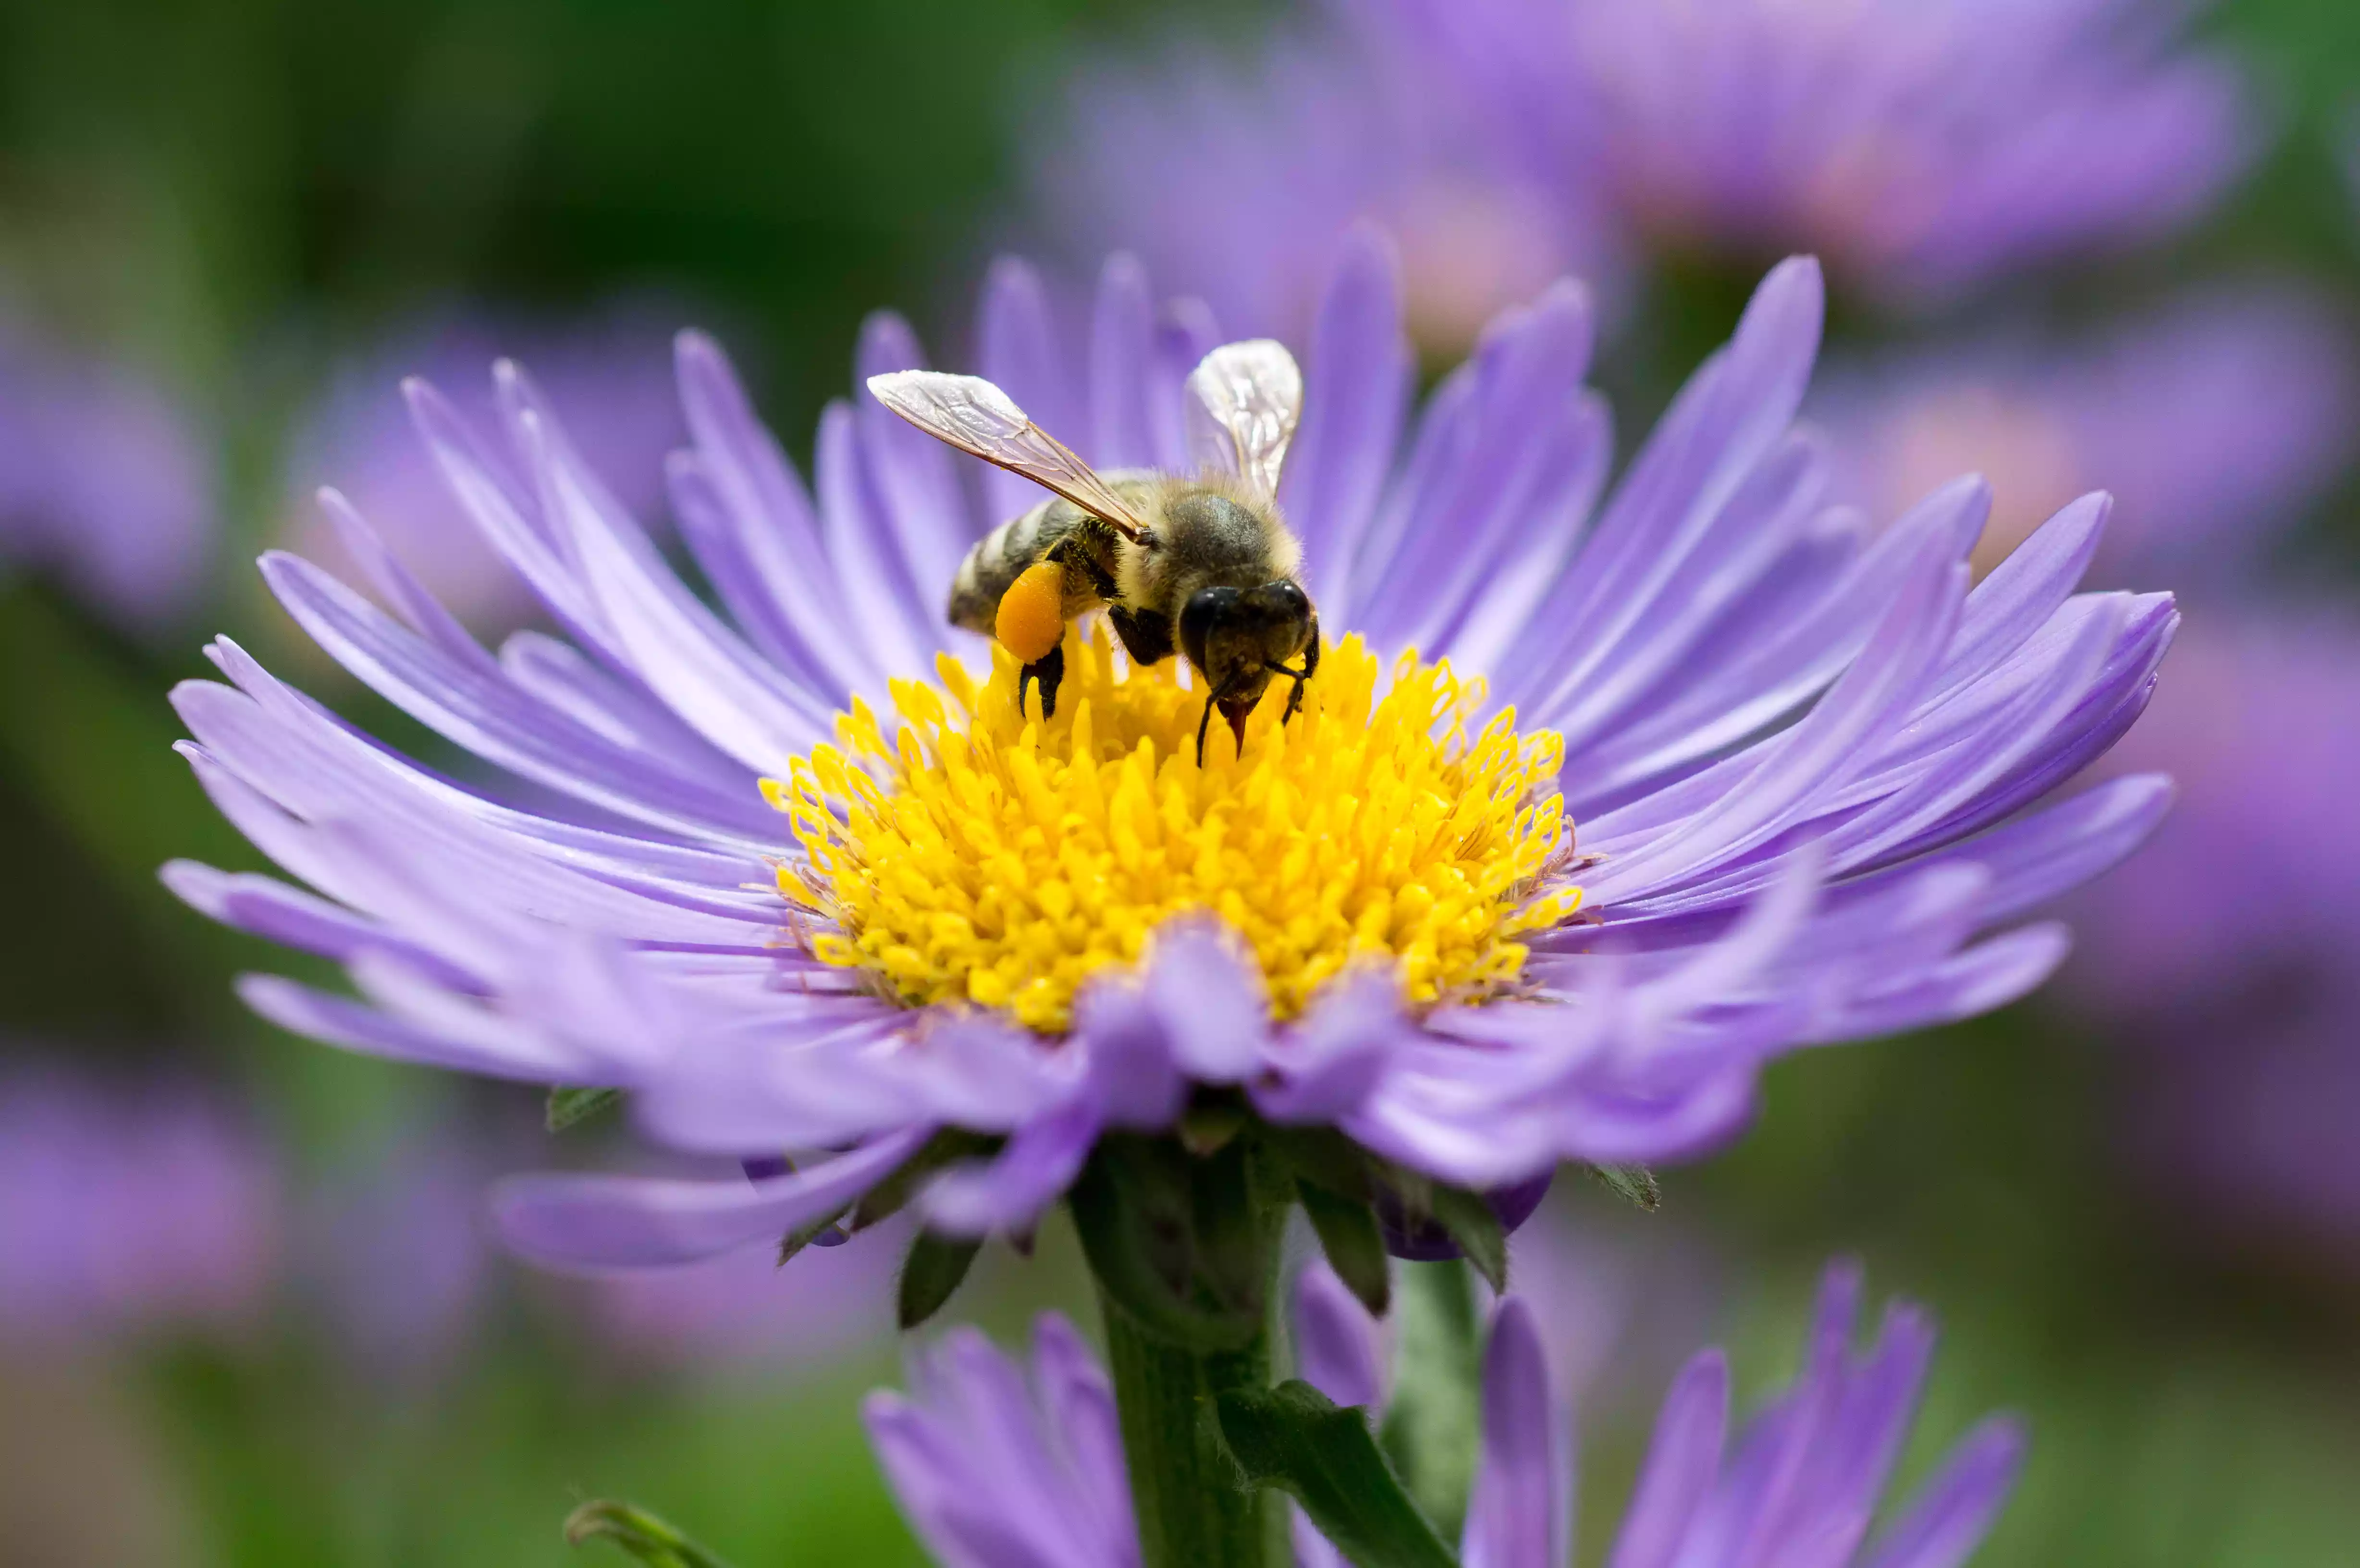 A honey bee investigates an aster